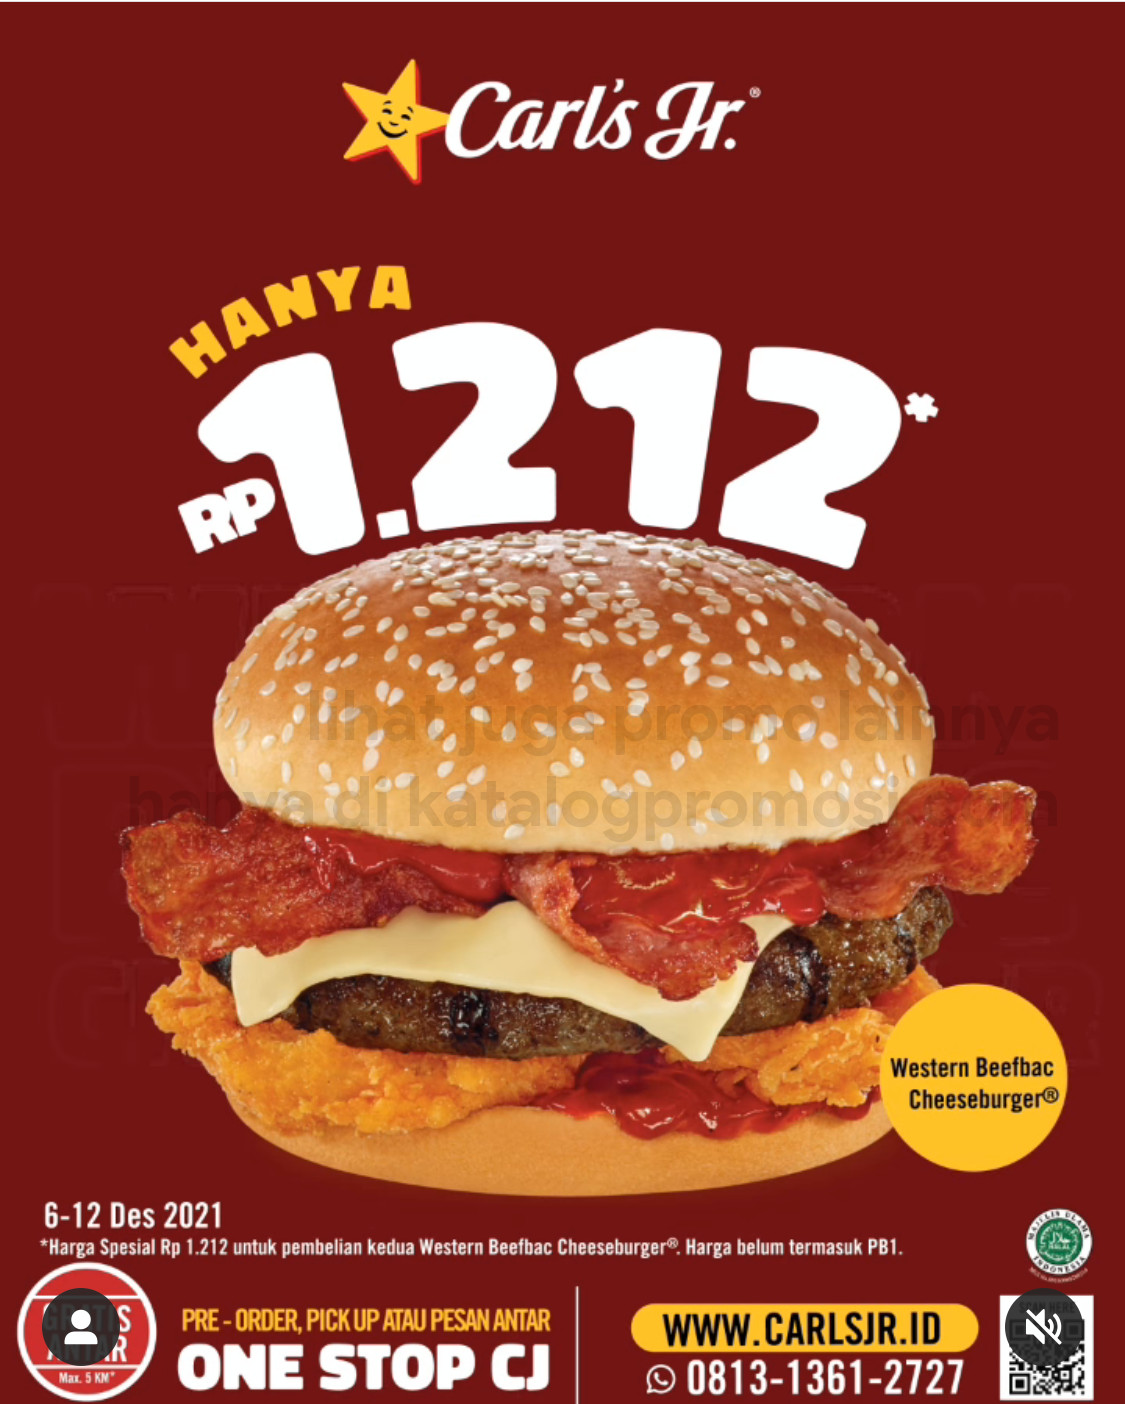 Promo CARLS Jr HAPPY 12.12 - Harga Spesial Rp 1.212 untuk Western Beefbac Cheeseburger*